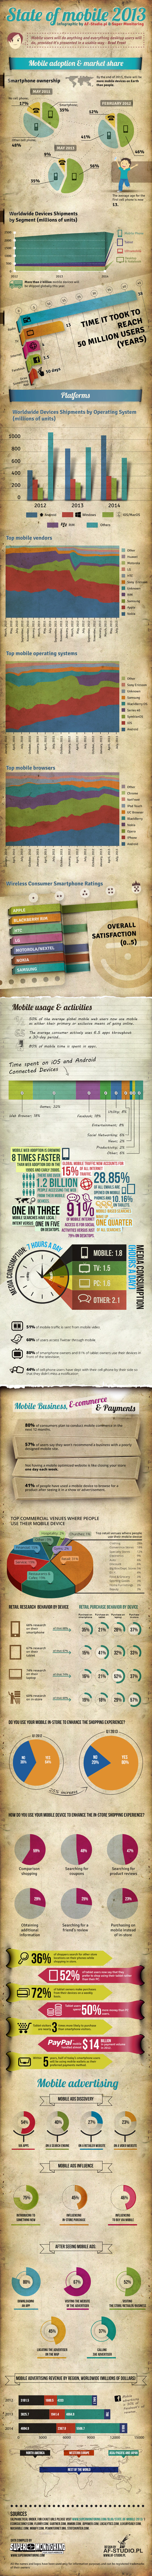 Infographic-2013-Mobile-Growth-Statistics-Medium